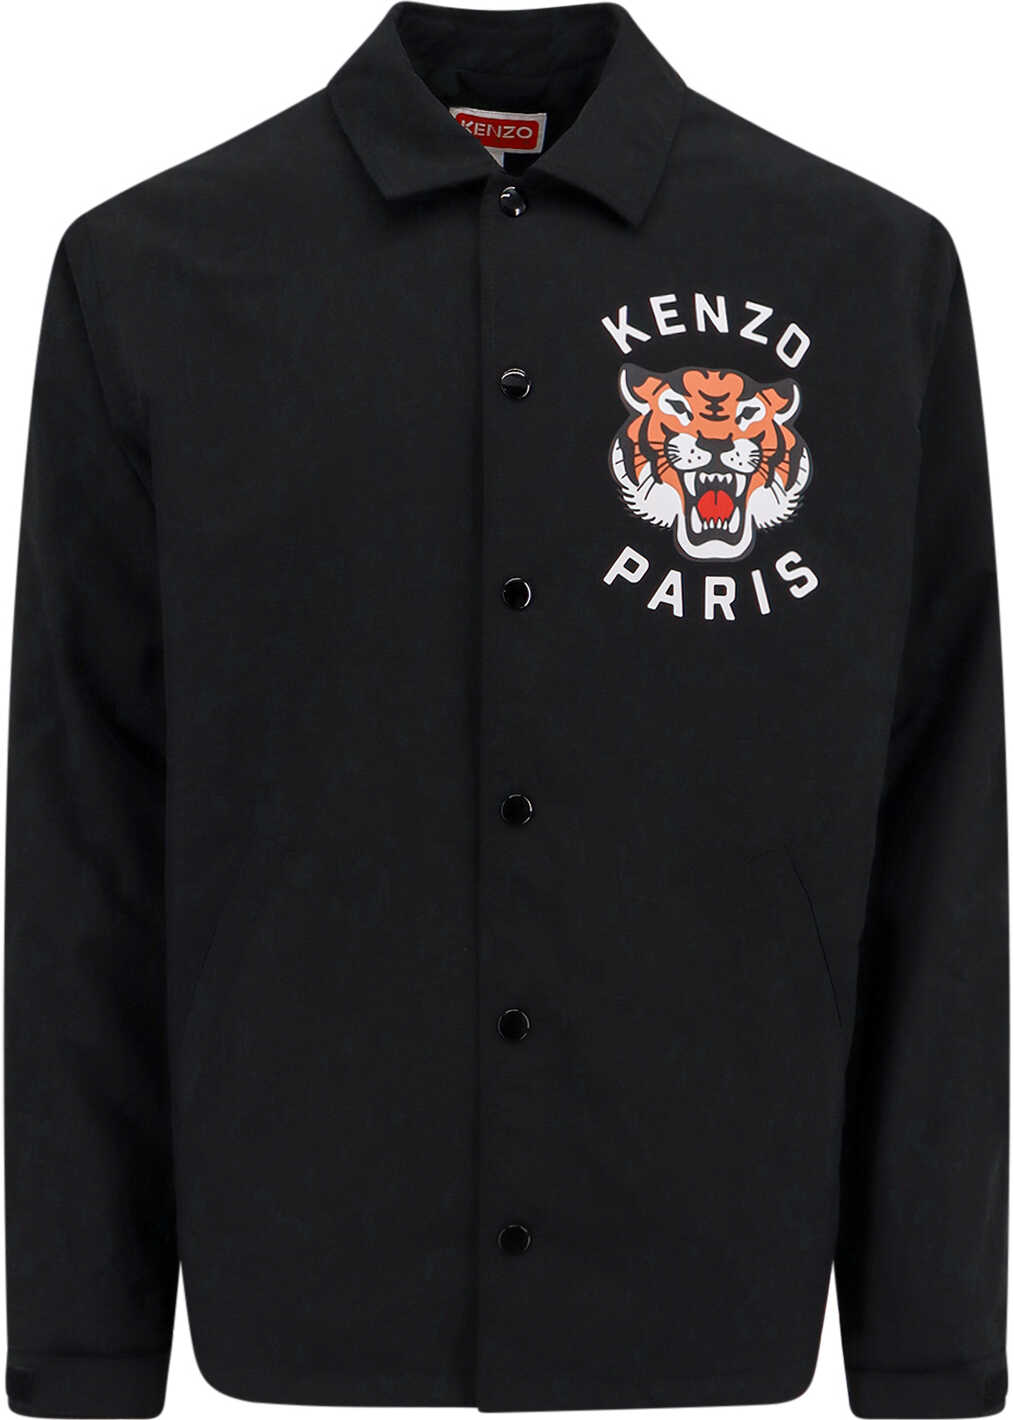 KENZO PARIS Jacket Black